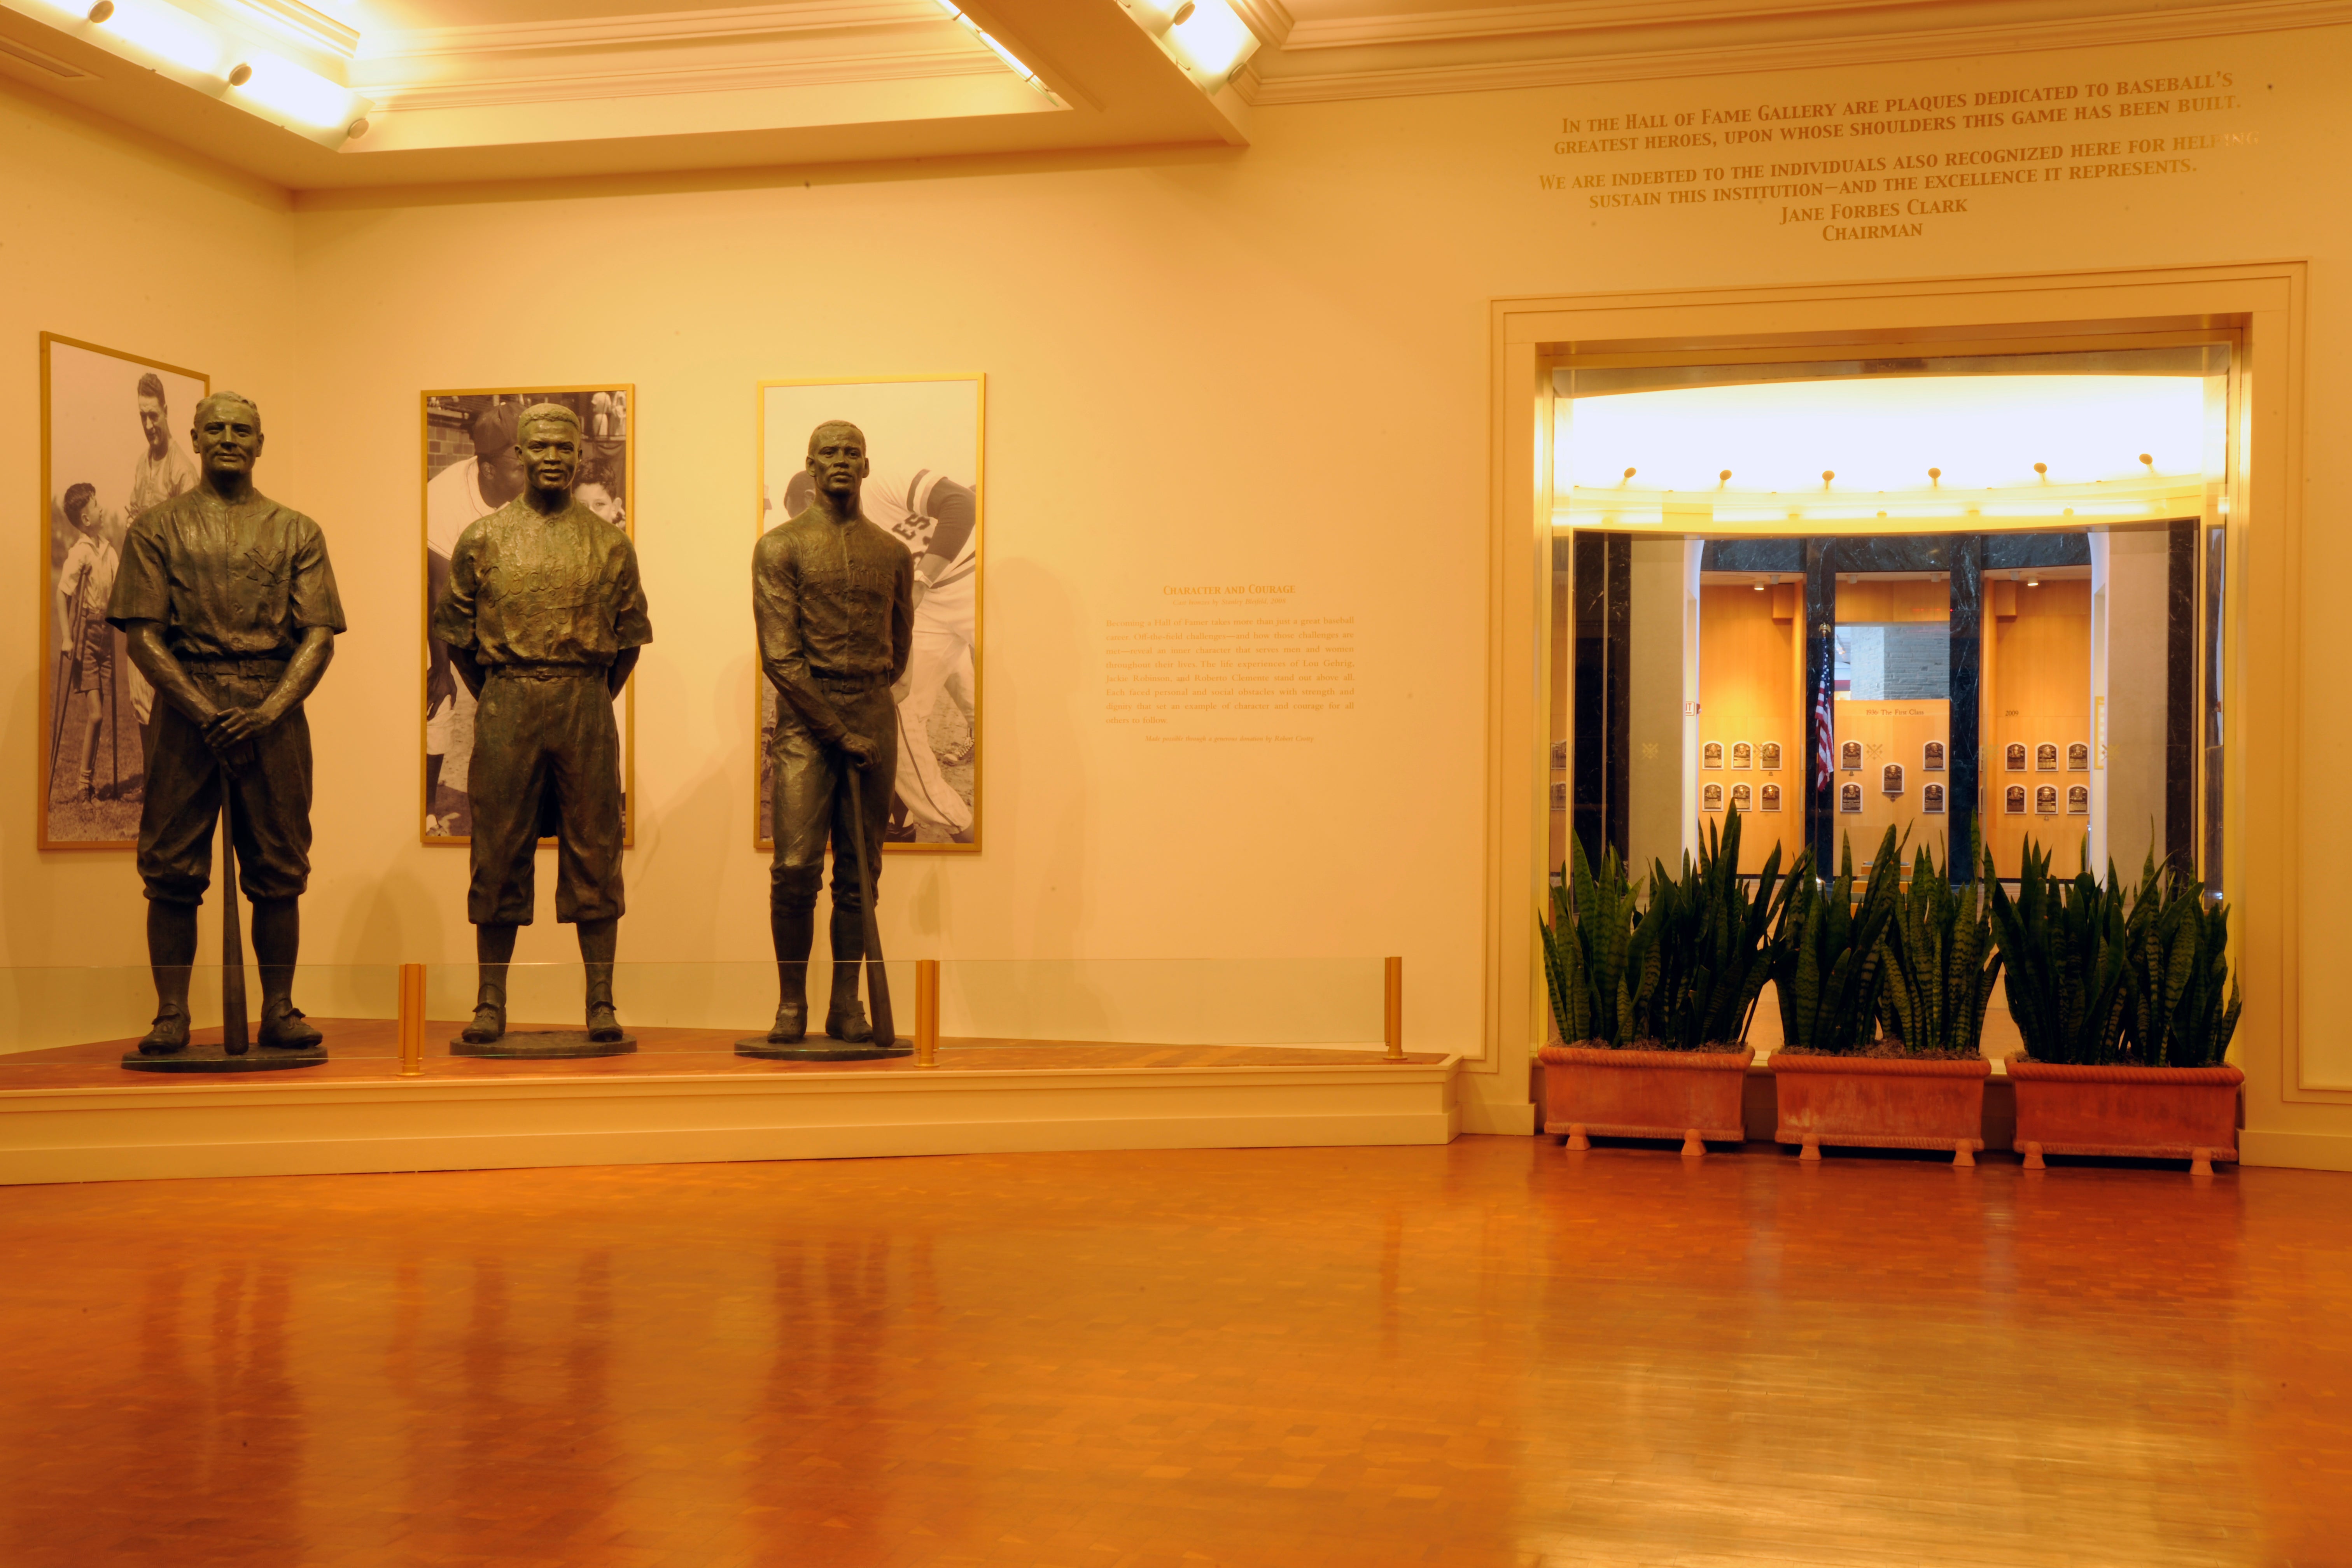 The Museum lobby